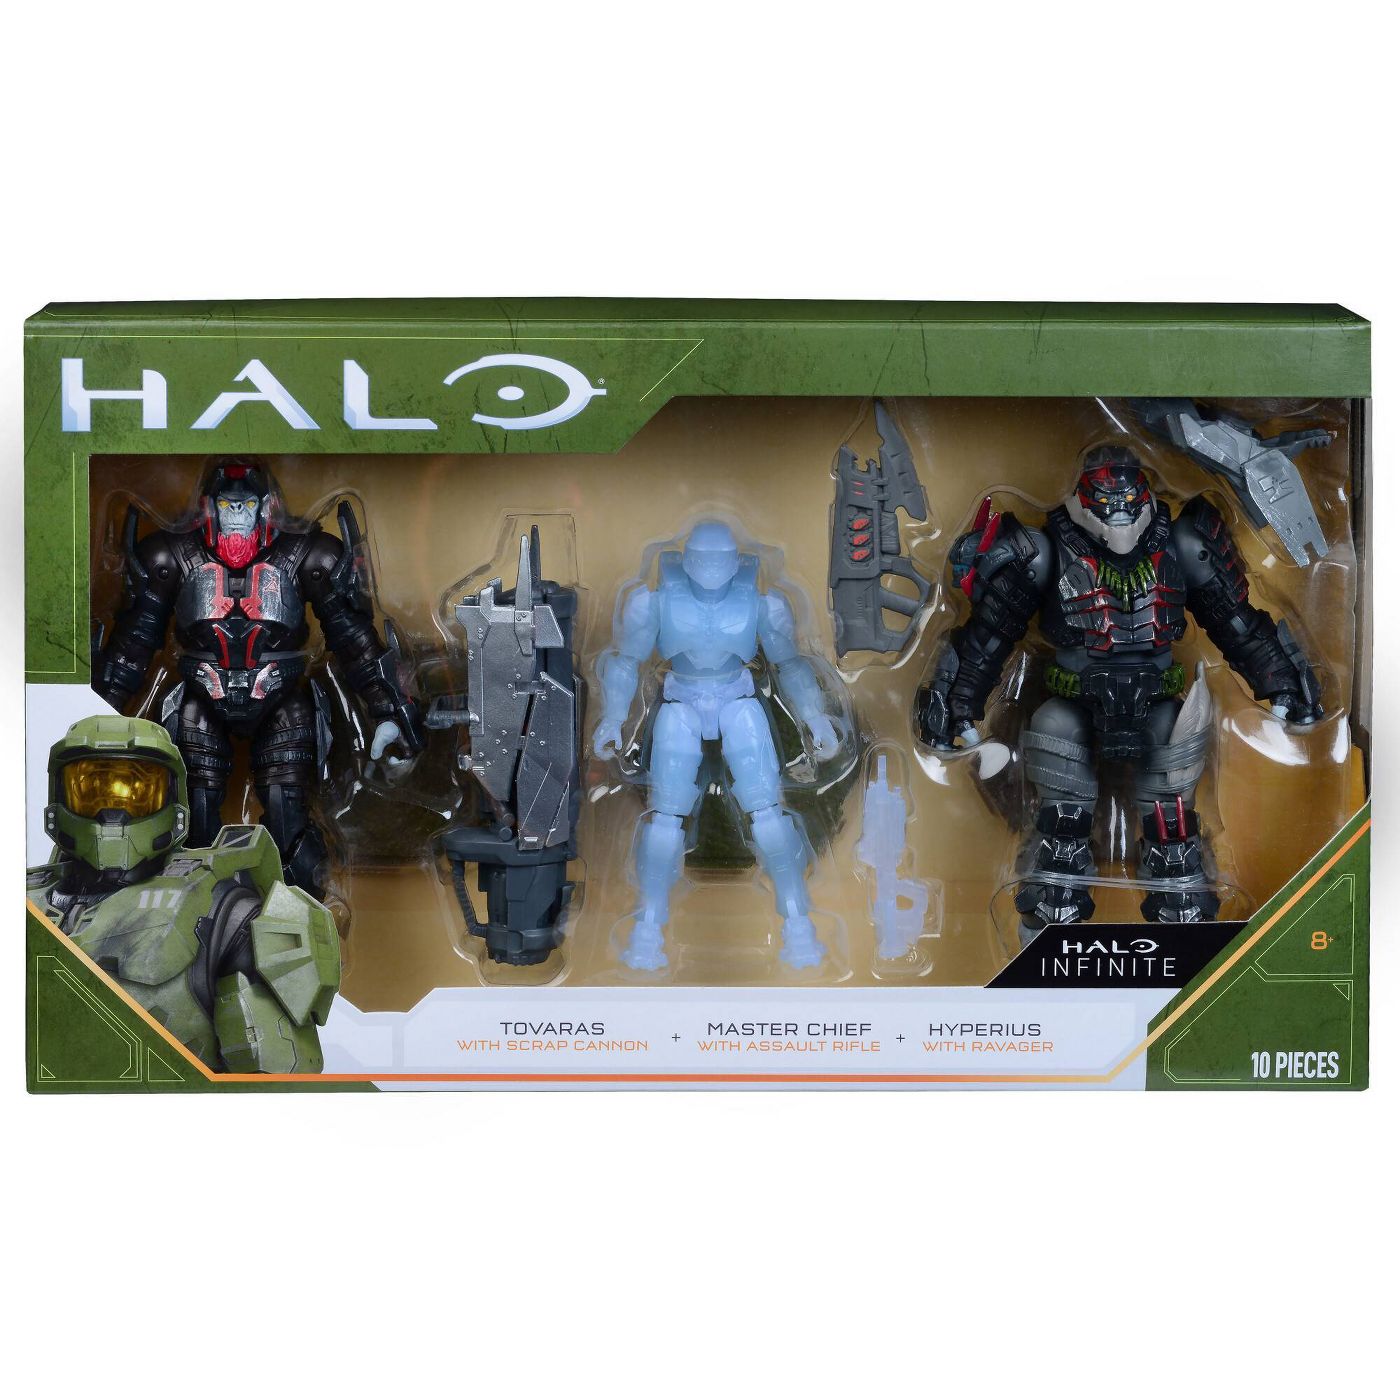 World of Halo Halo Infinite 3 Figure Pack画像